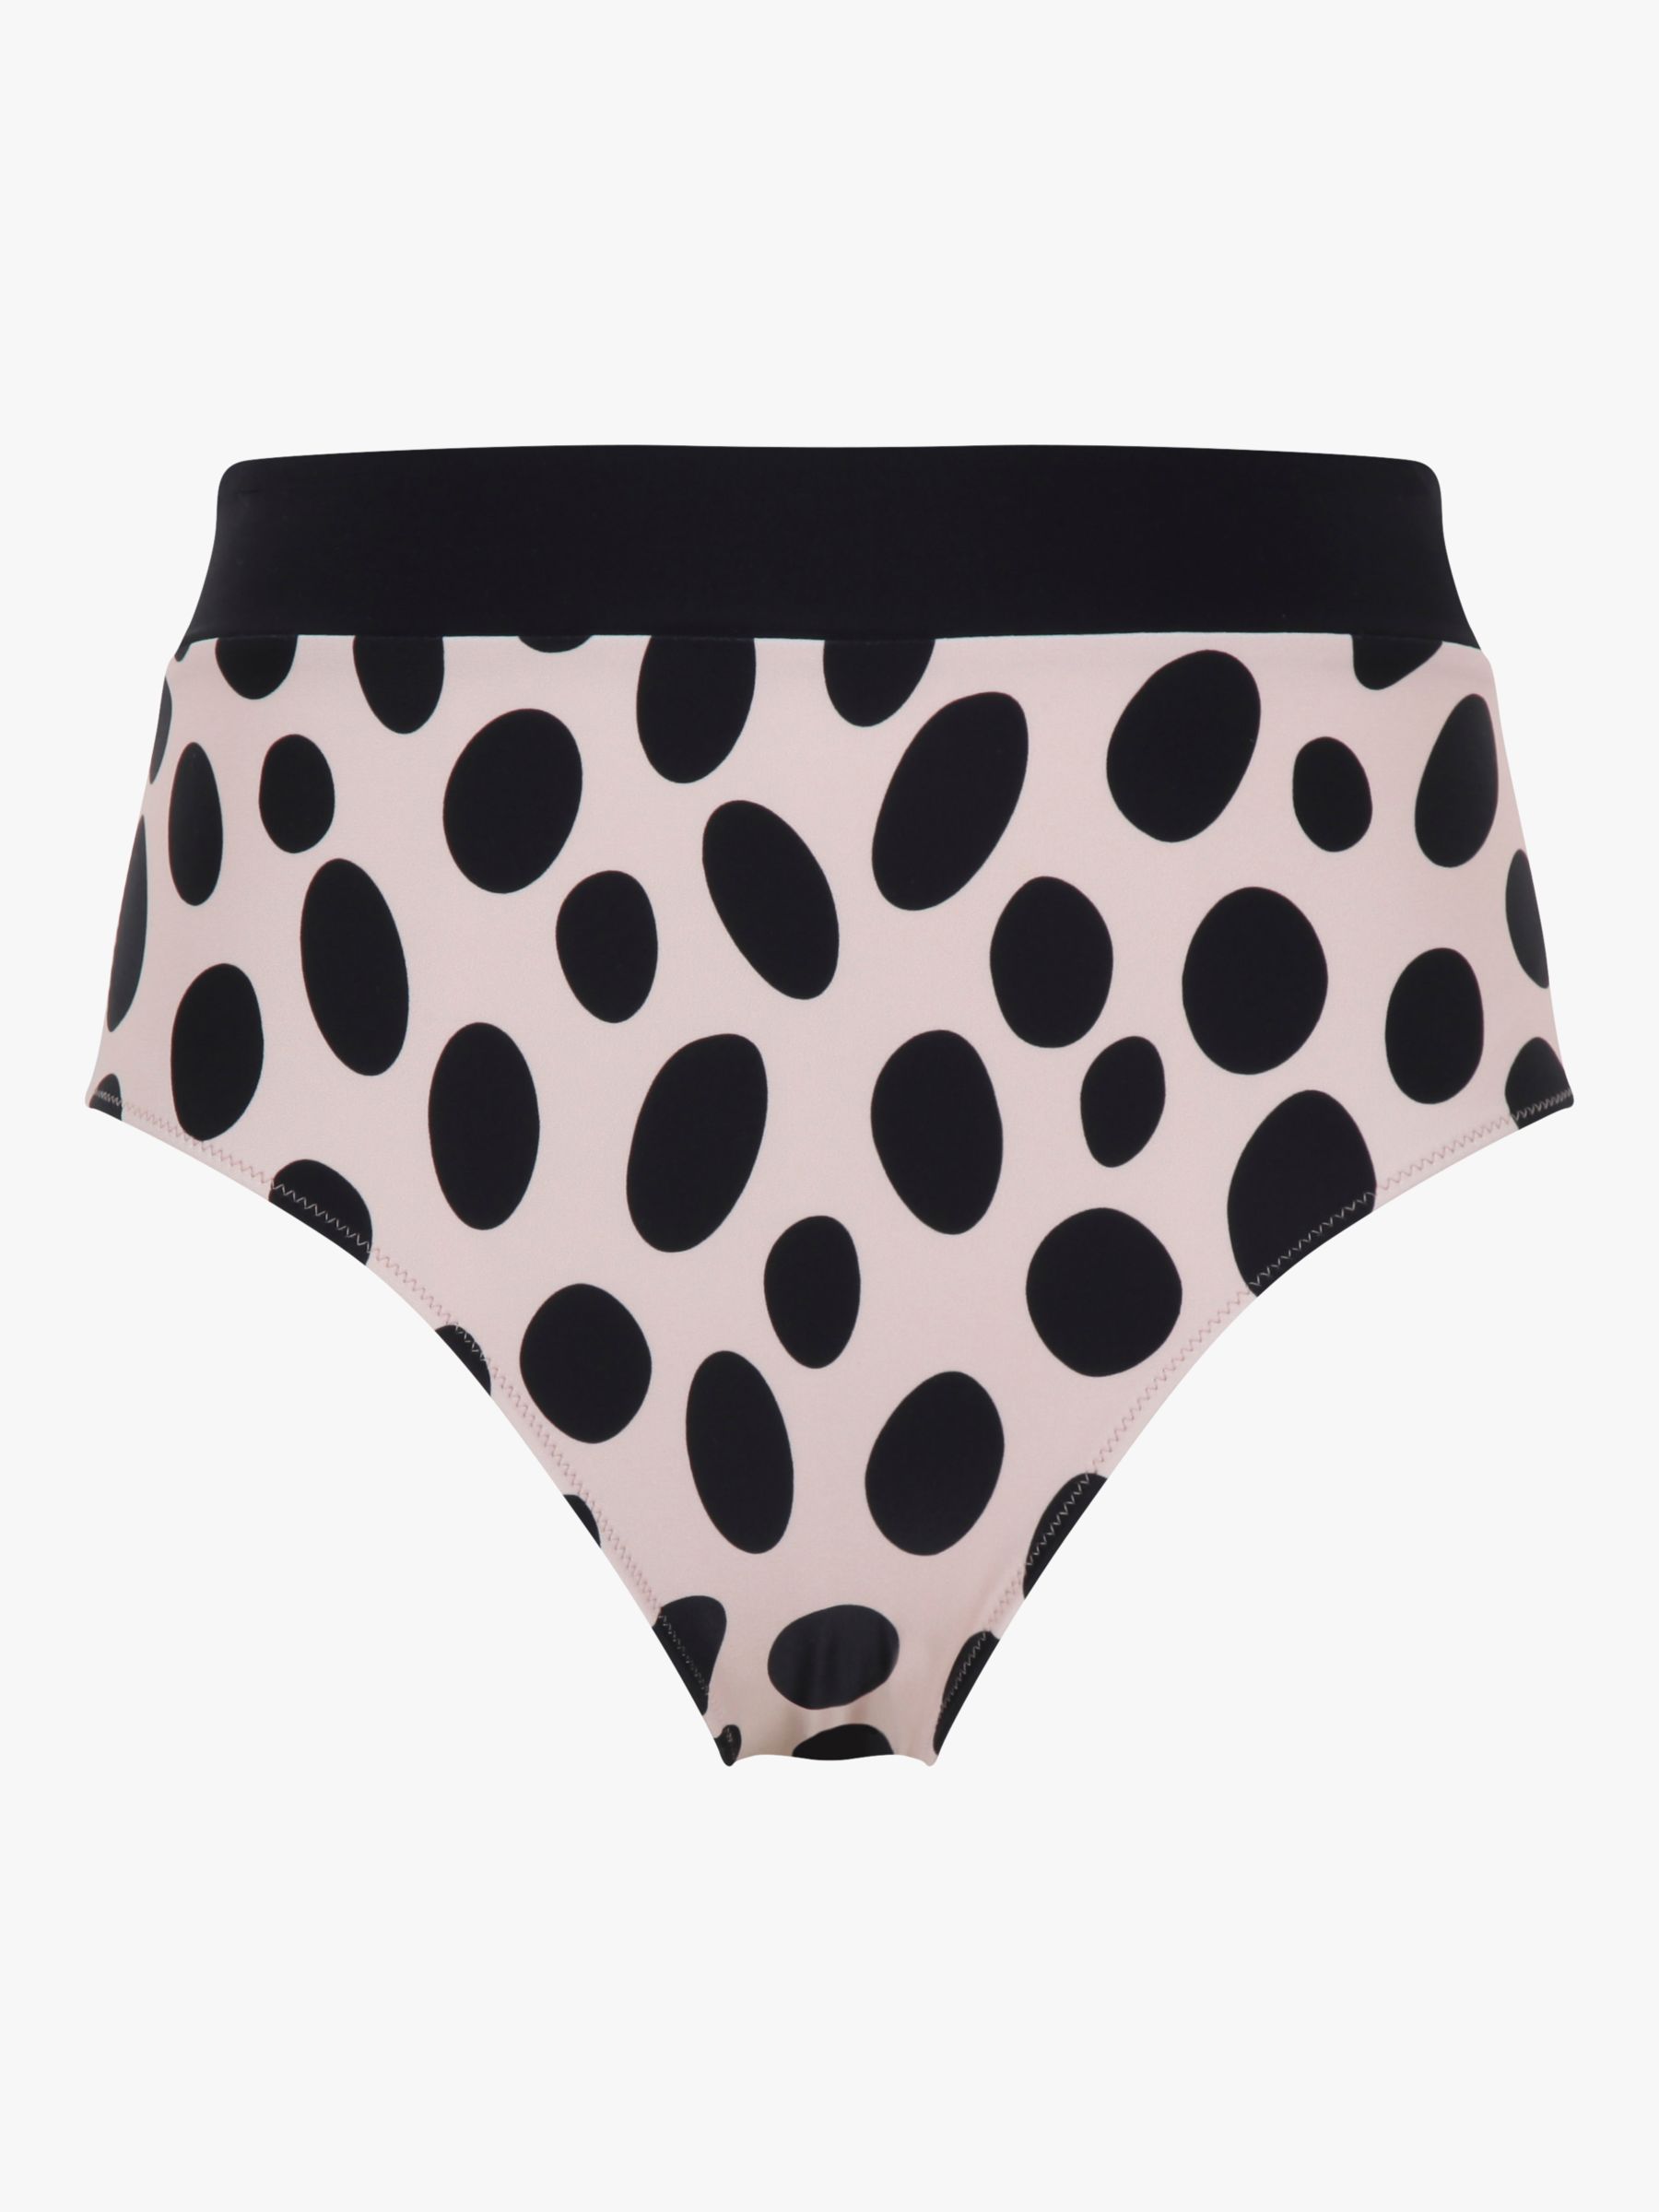 Panache Swim Amalfi High Waist Bikini Bottoms, Black/Taupe, 8